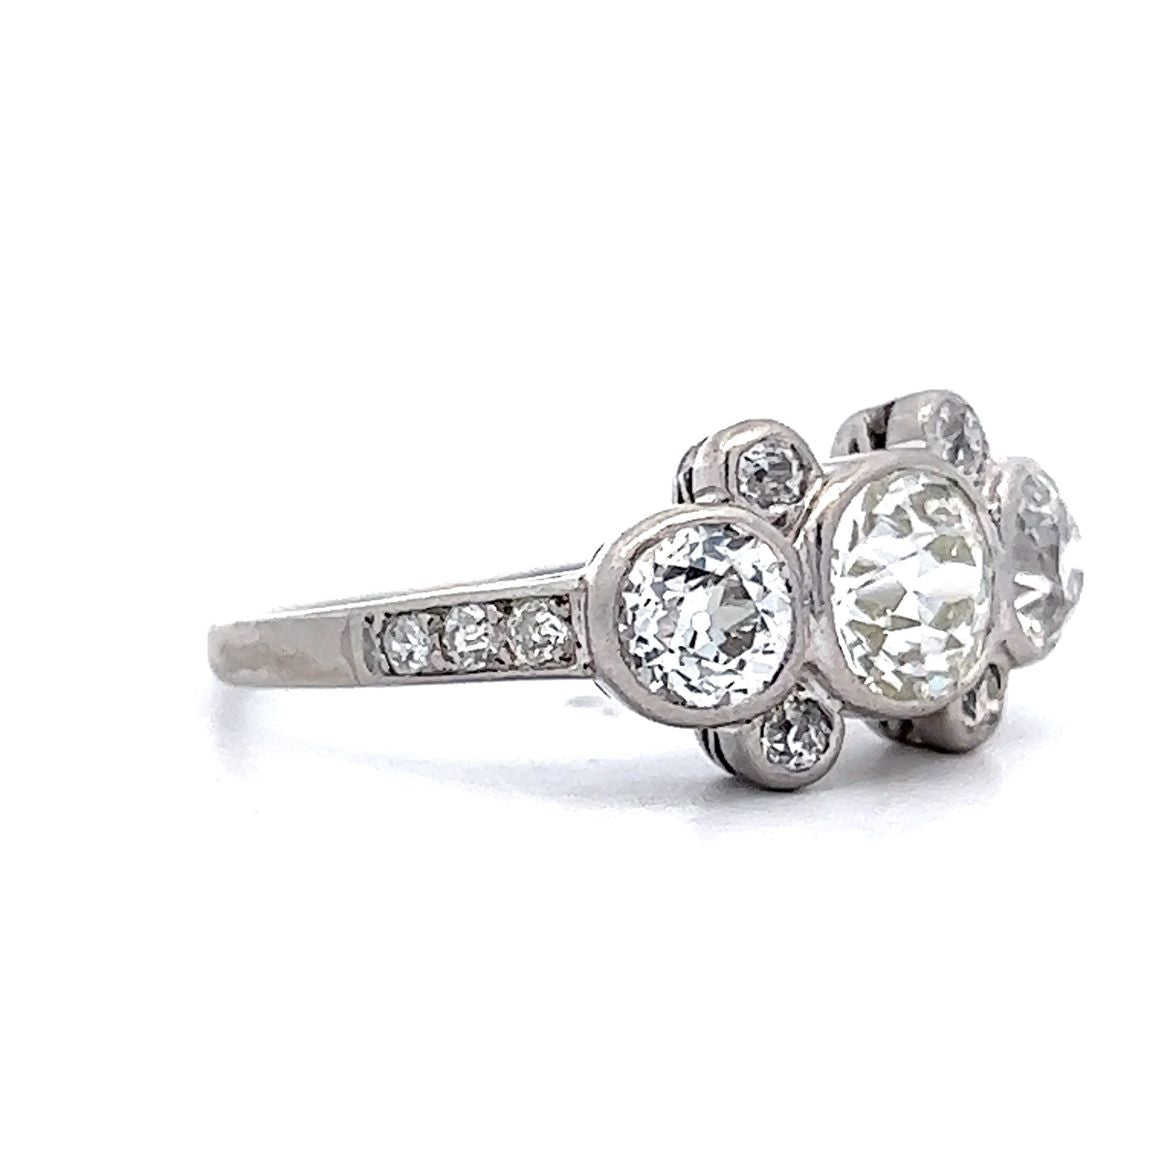 Bezel Set Art Deco Diamond Cocktail Ring in Platinum